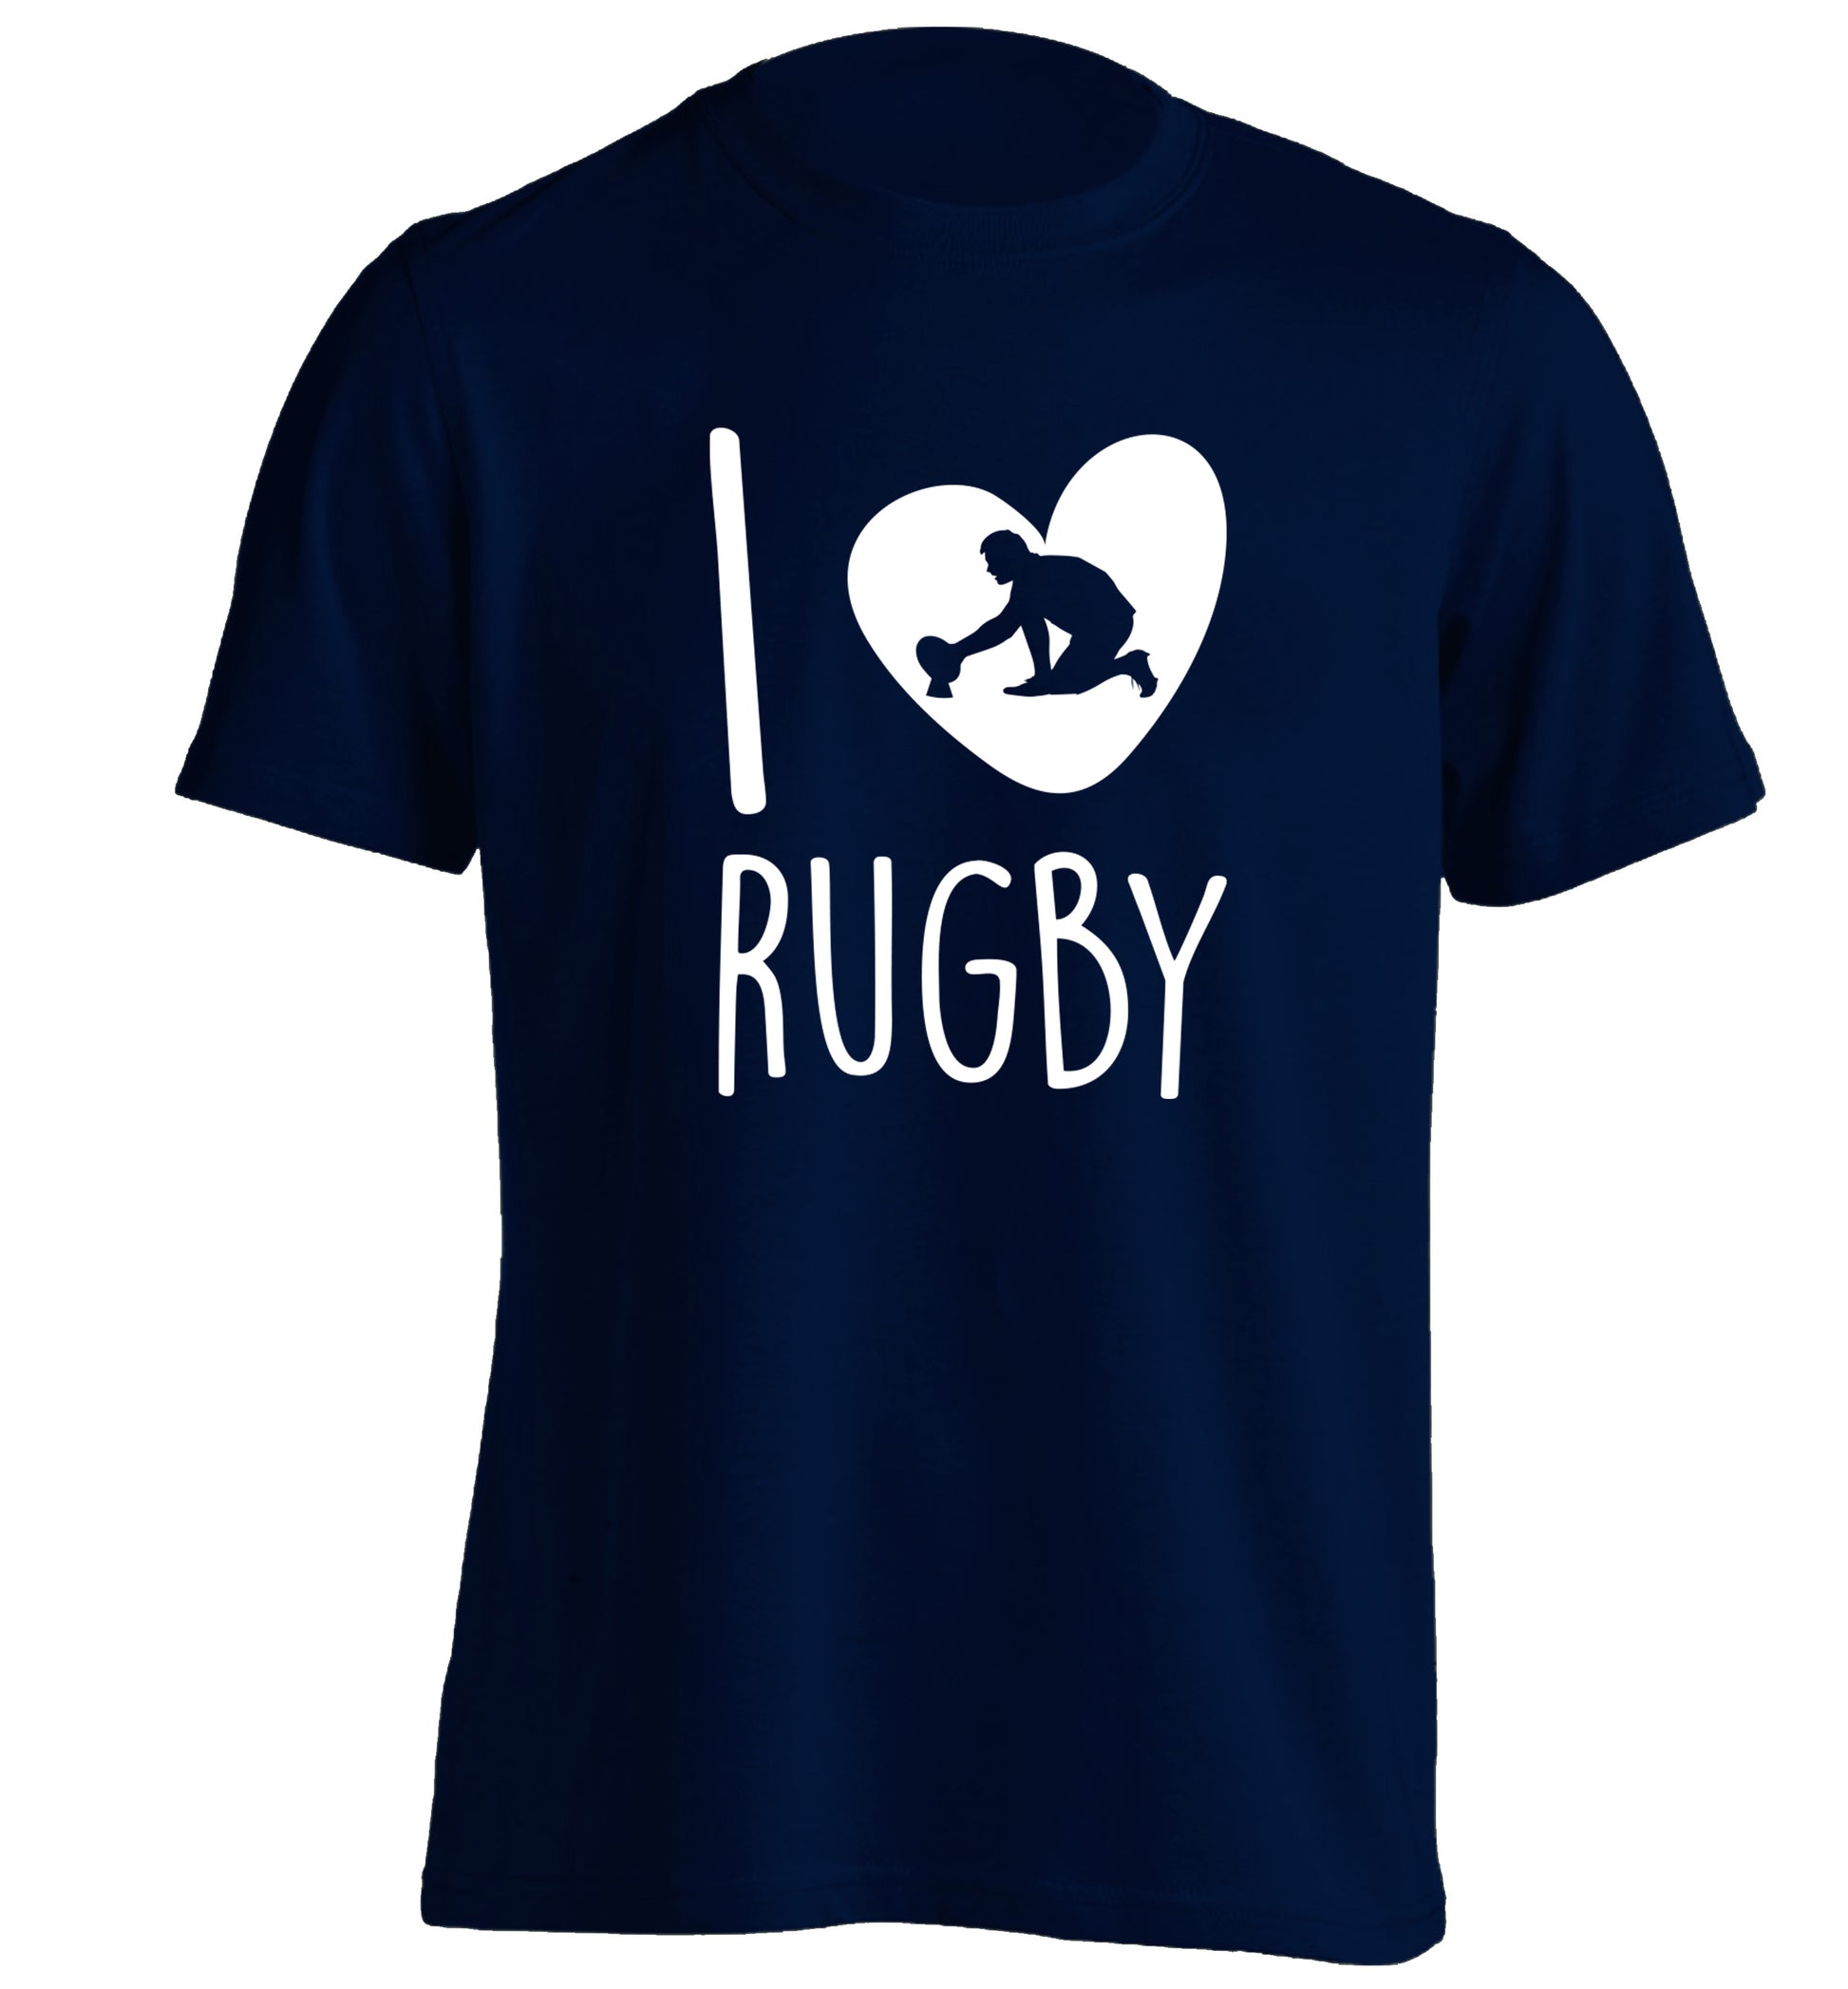 I love rugby adults unisex navy Tshirt 2XL